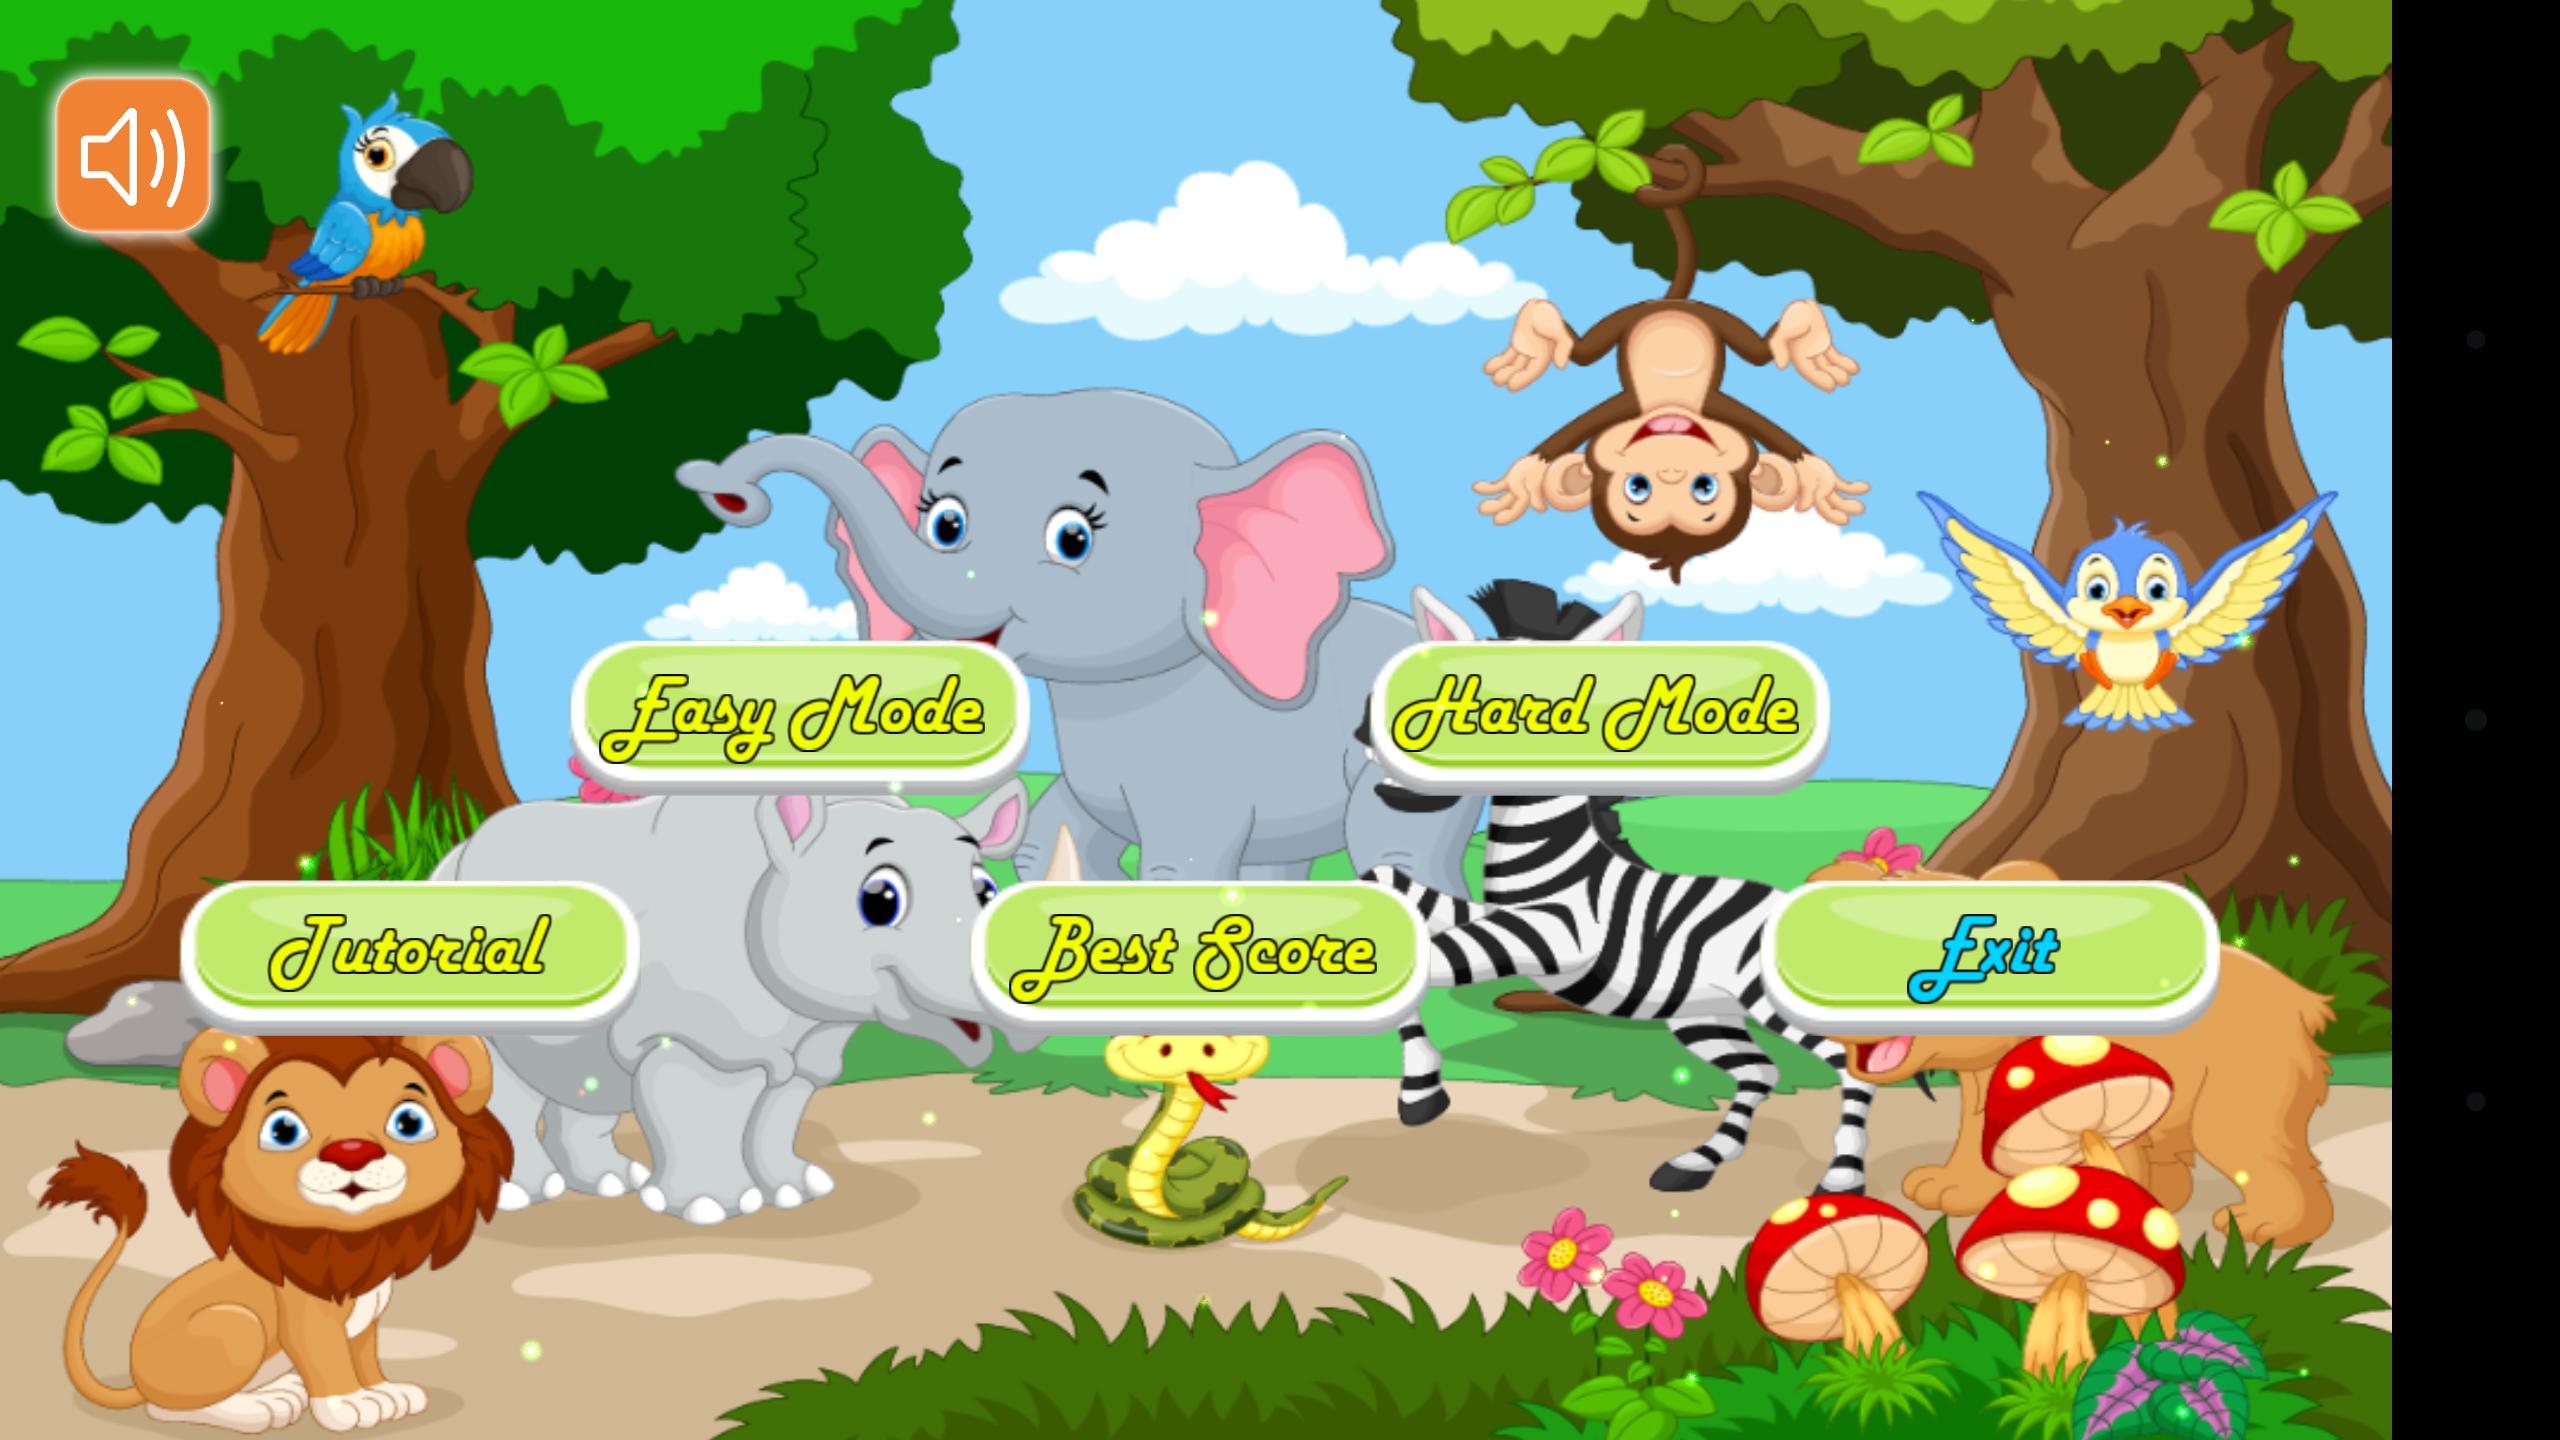 Онет Анимал. Cute animals games. Animal link Classic. Forest animals nakleyki for Kids. Animals apk